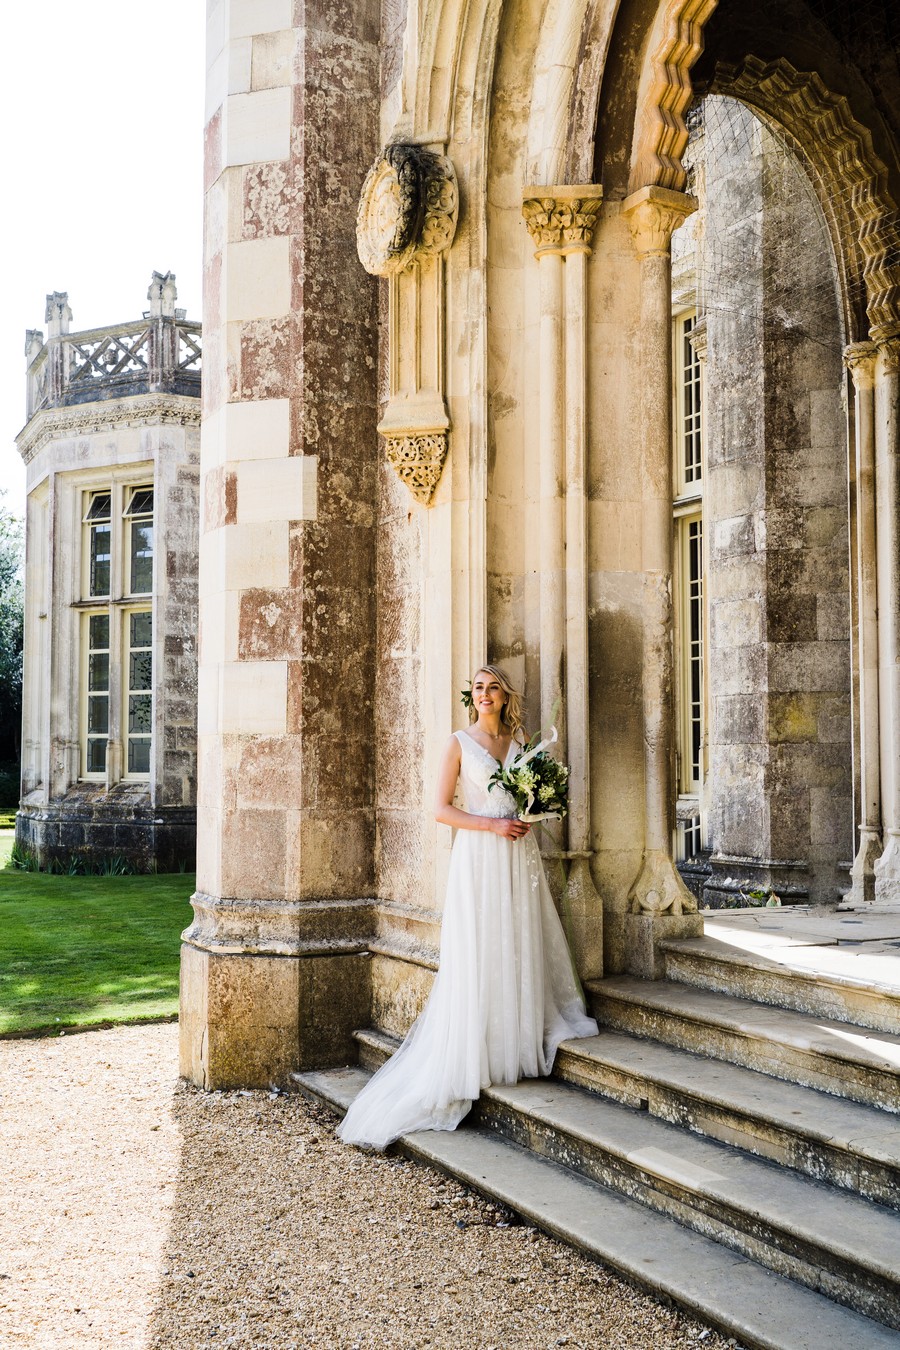 Highcliffe Castle wedding inspiration on the English Wedding Blog (36)